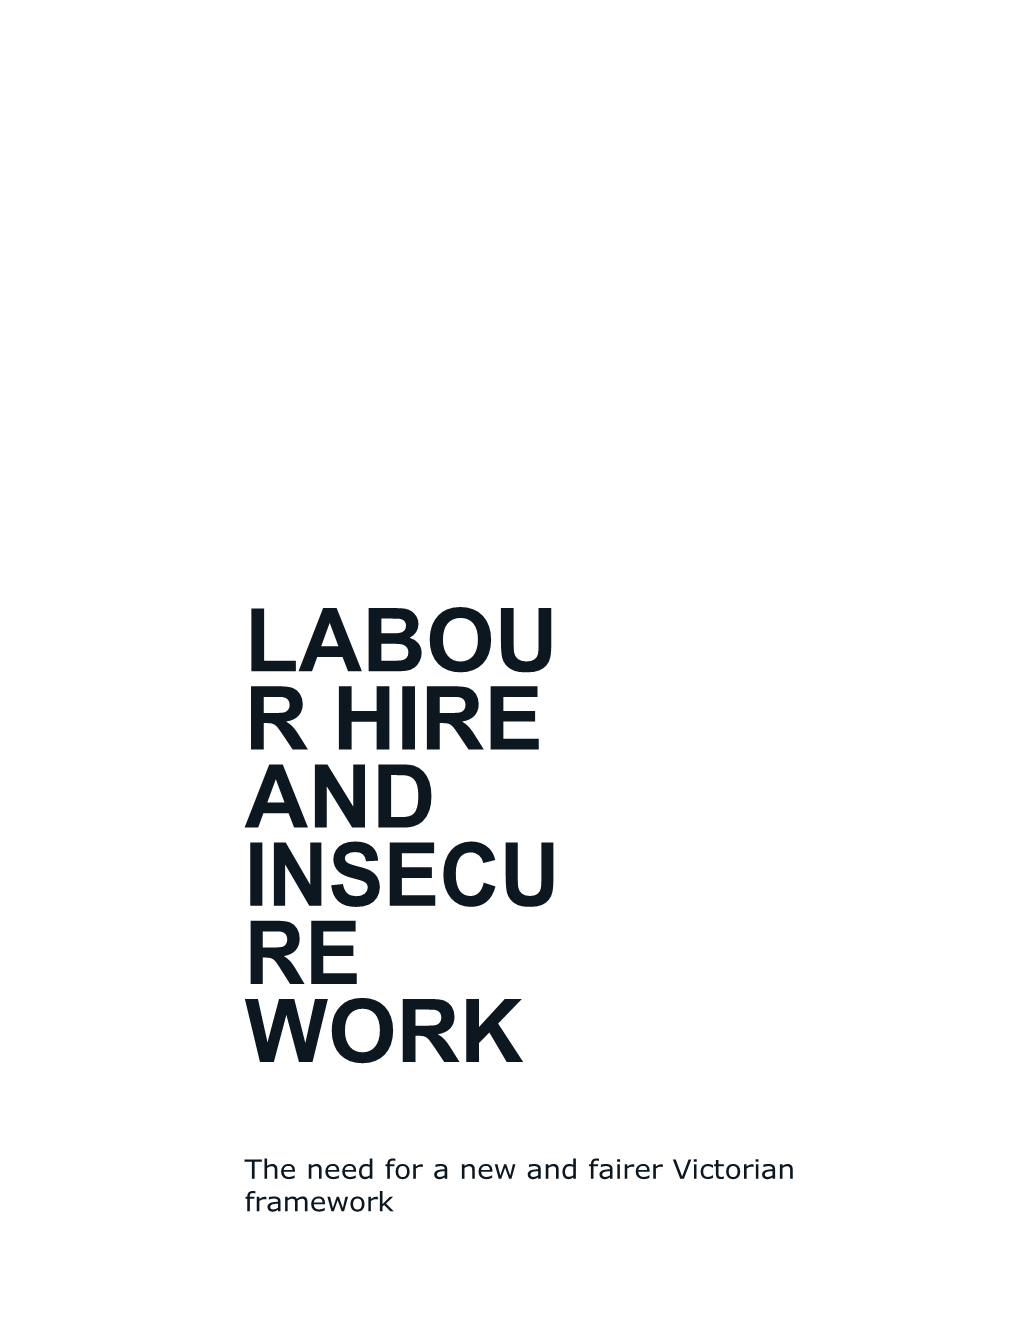 3.2Employmentstatus:Labourhire,Casualisationandshamcontracting 7